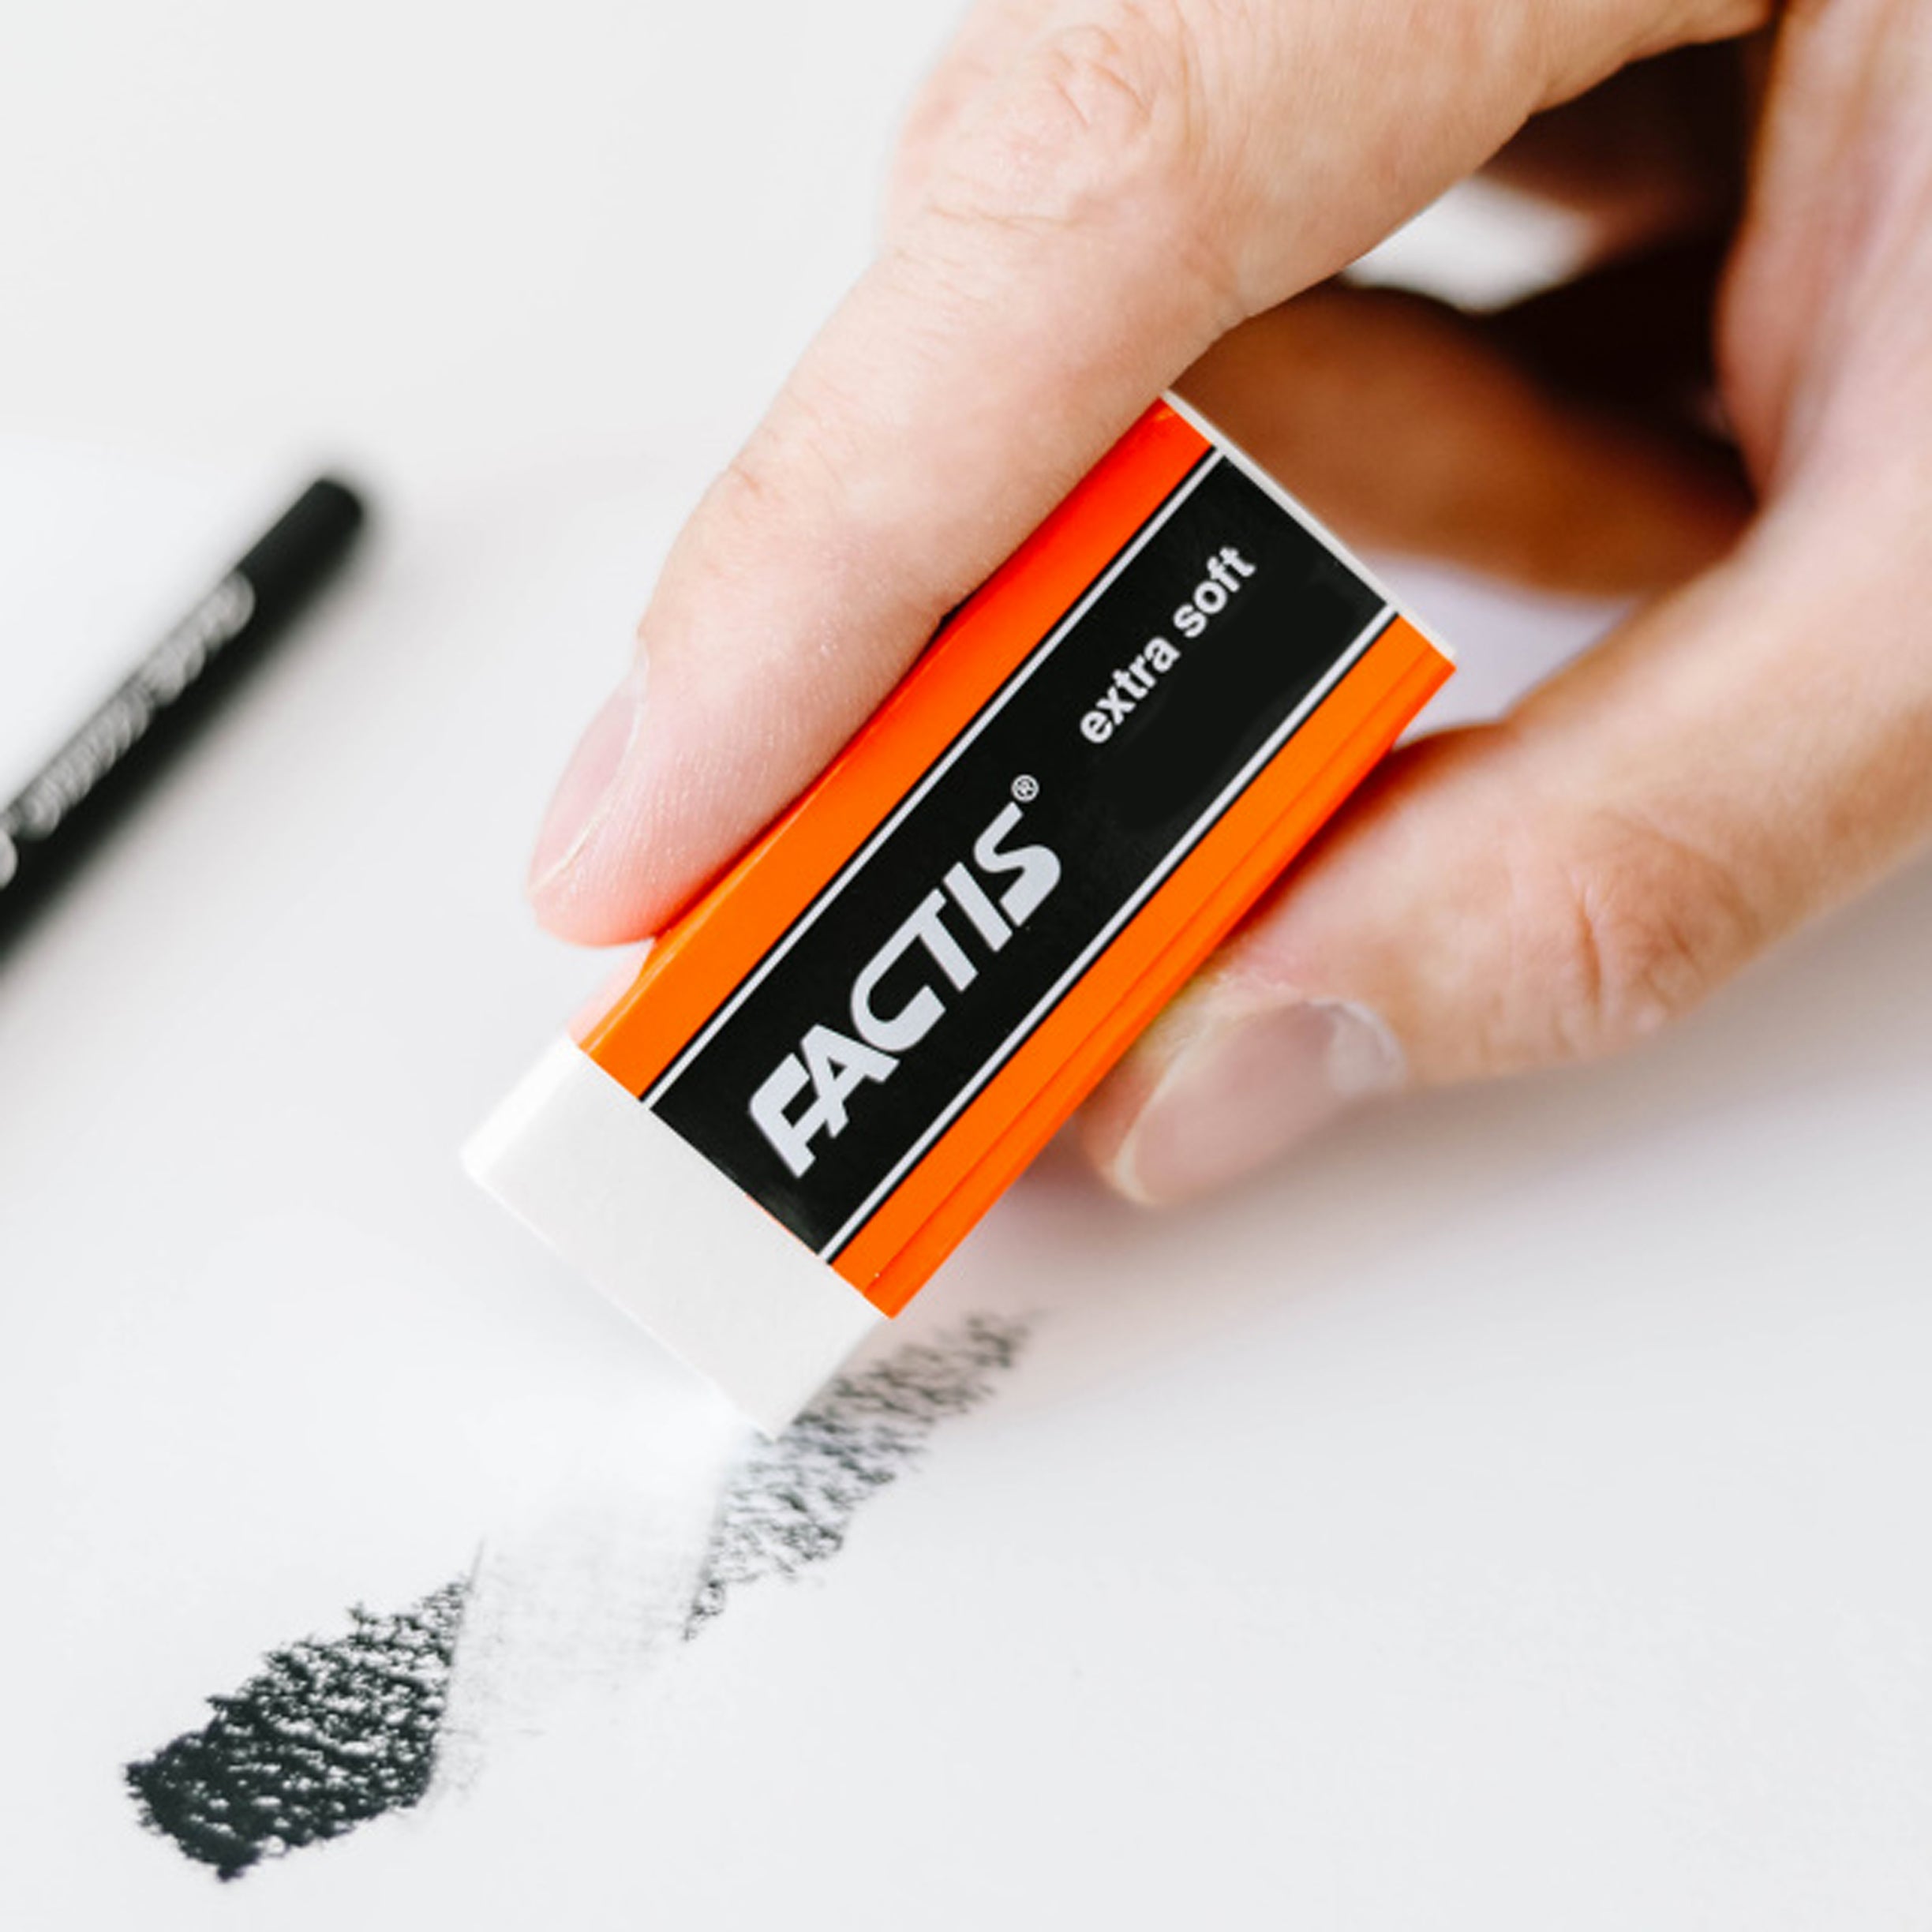 Factis Soft Rub Art Gum Eraser (Off White)